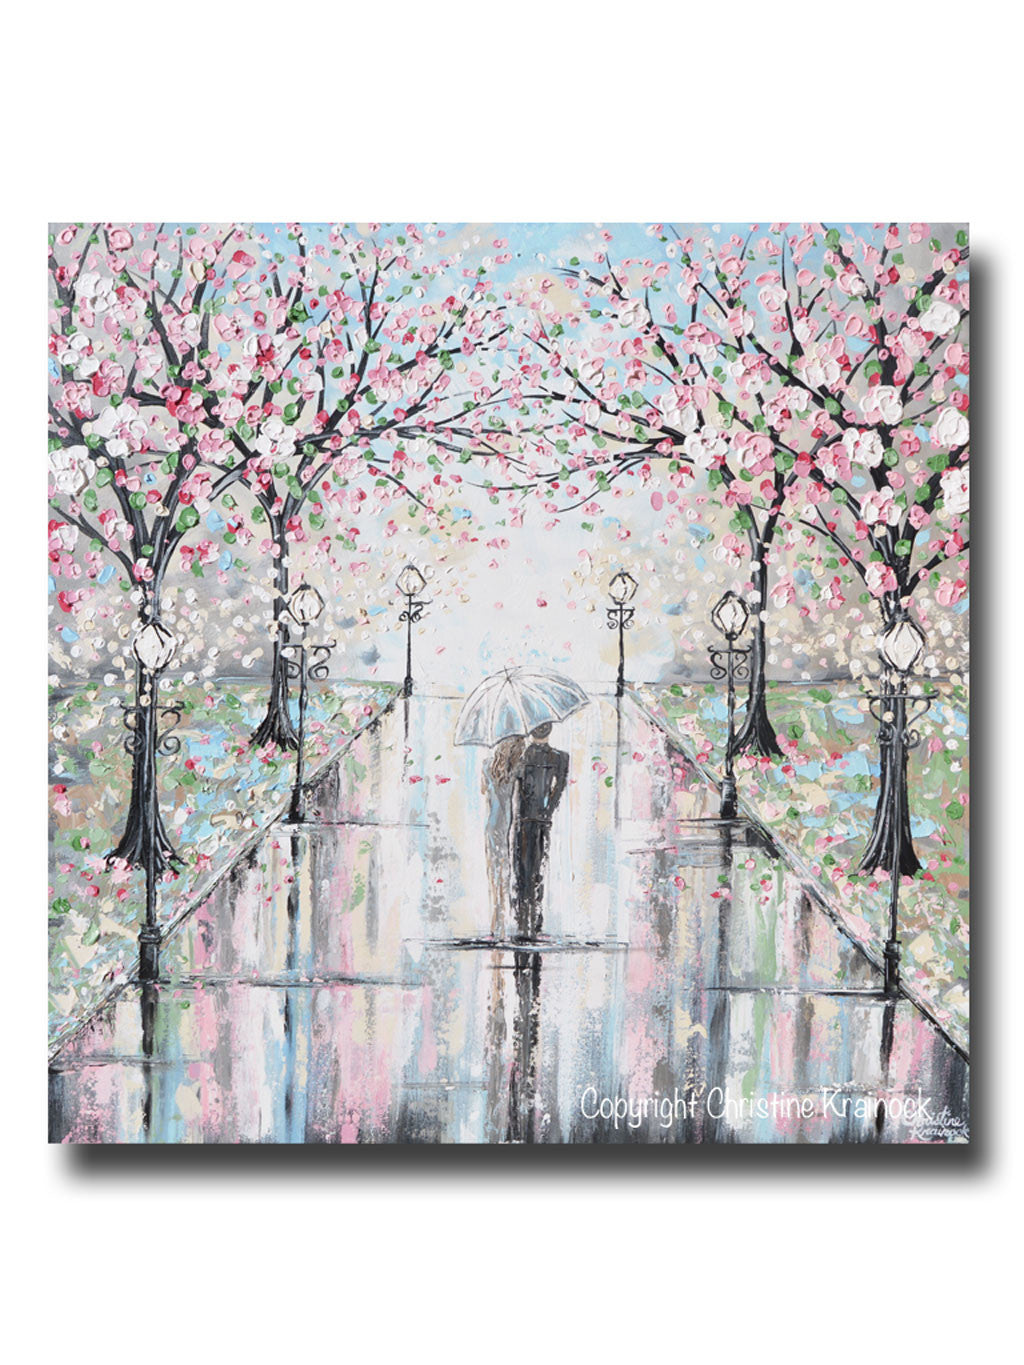 ORIGINAL Art Abstract Painting Couple with Umbrella Walk Rain Pink Cherry Trees Textured White Grey LARGE Wall Art Decor 36x36" - Christine Krainock Art - Contemporary Art by Christine - 1